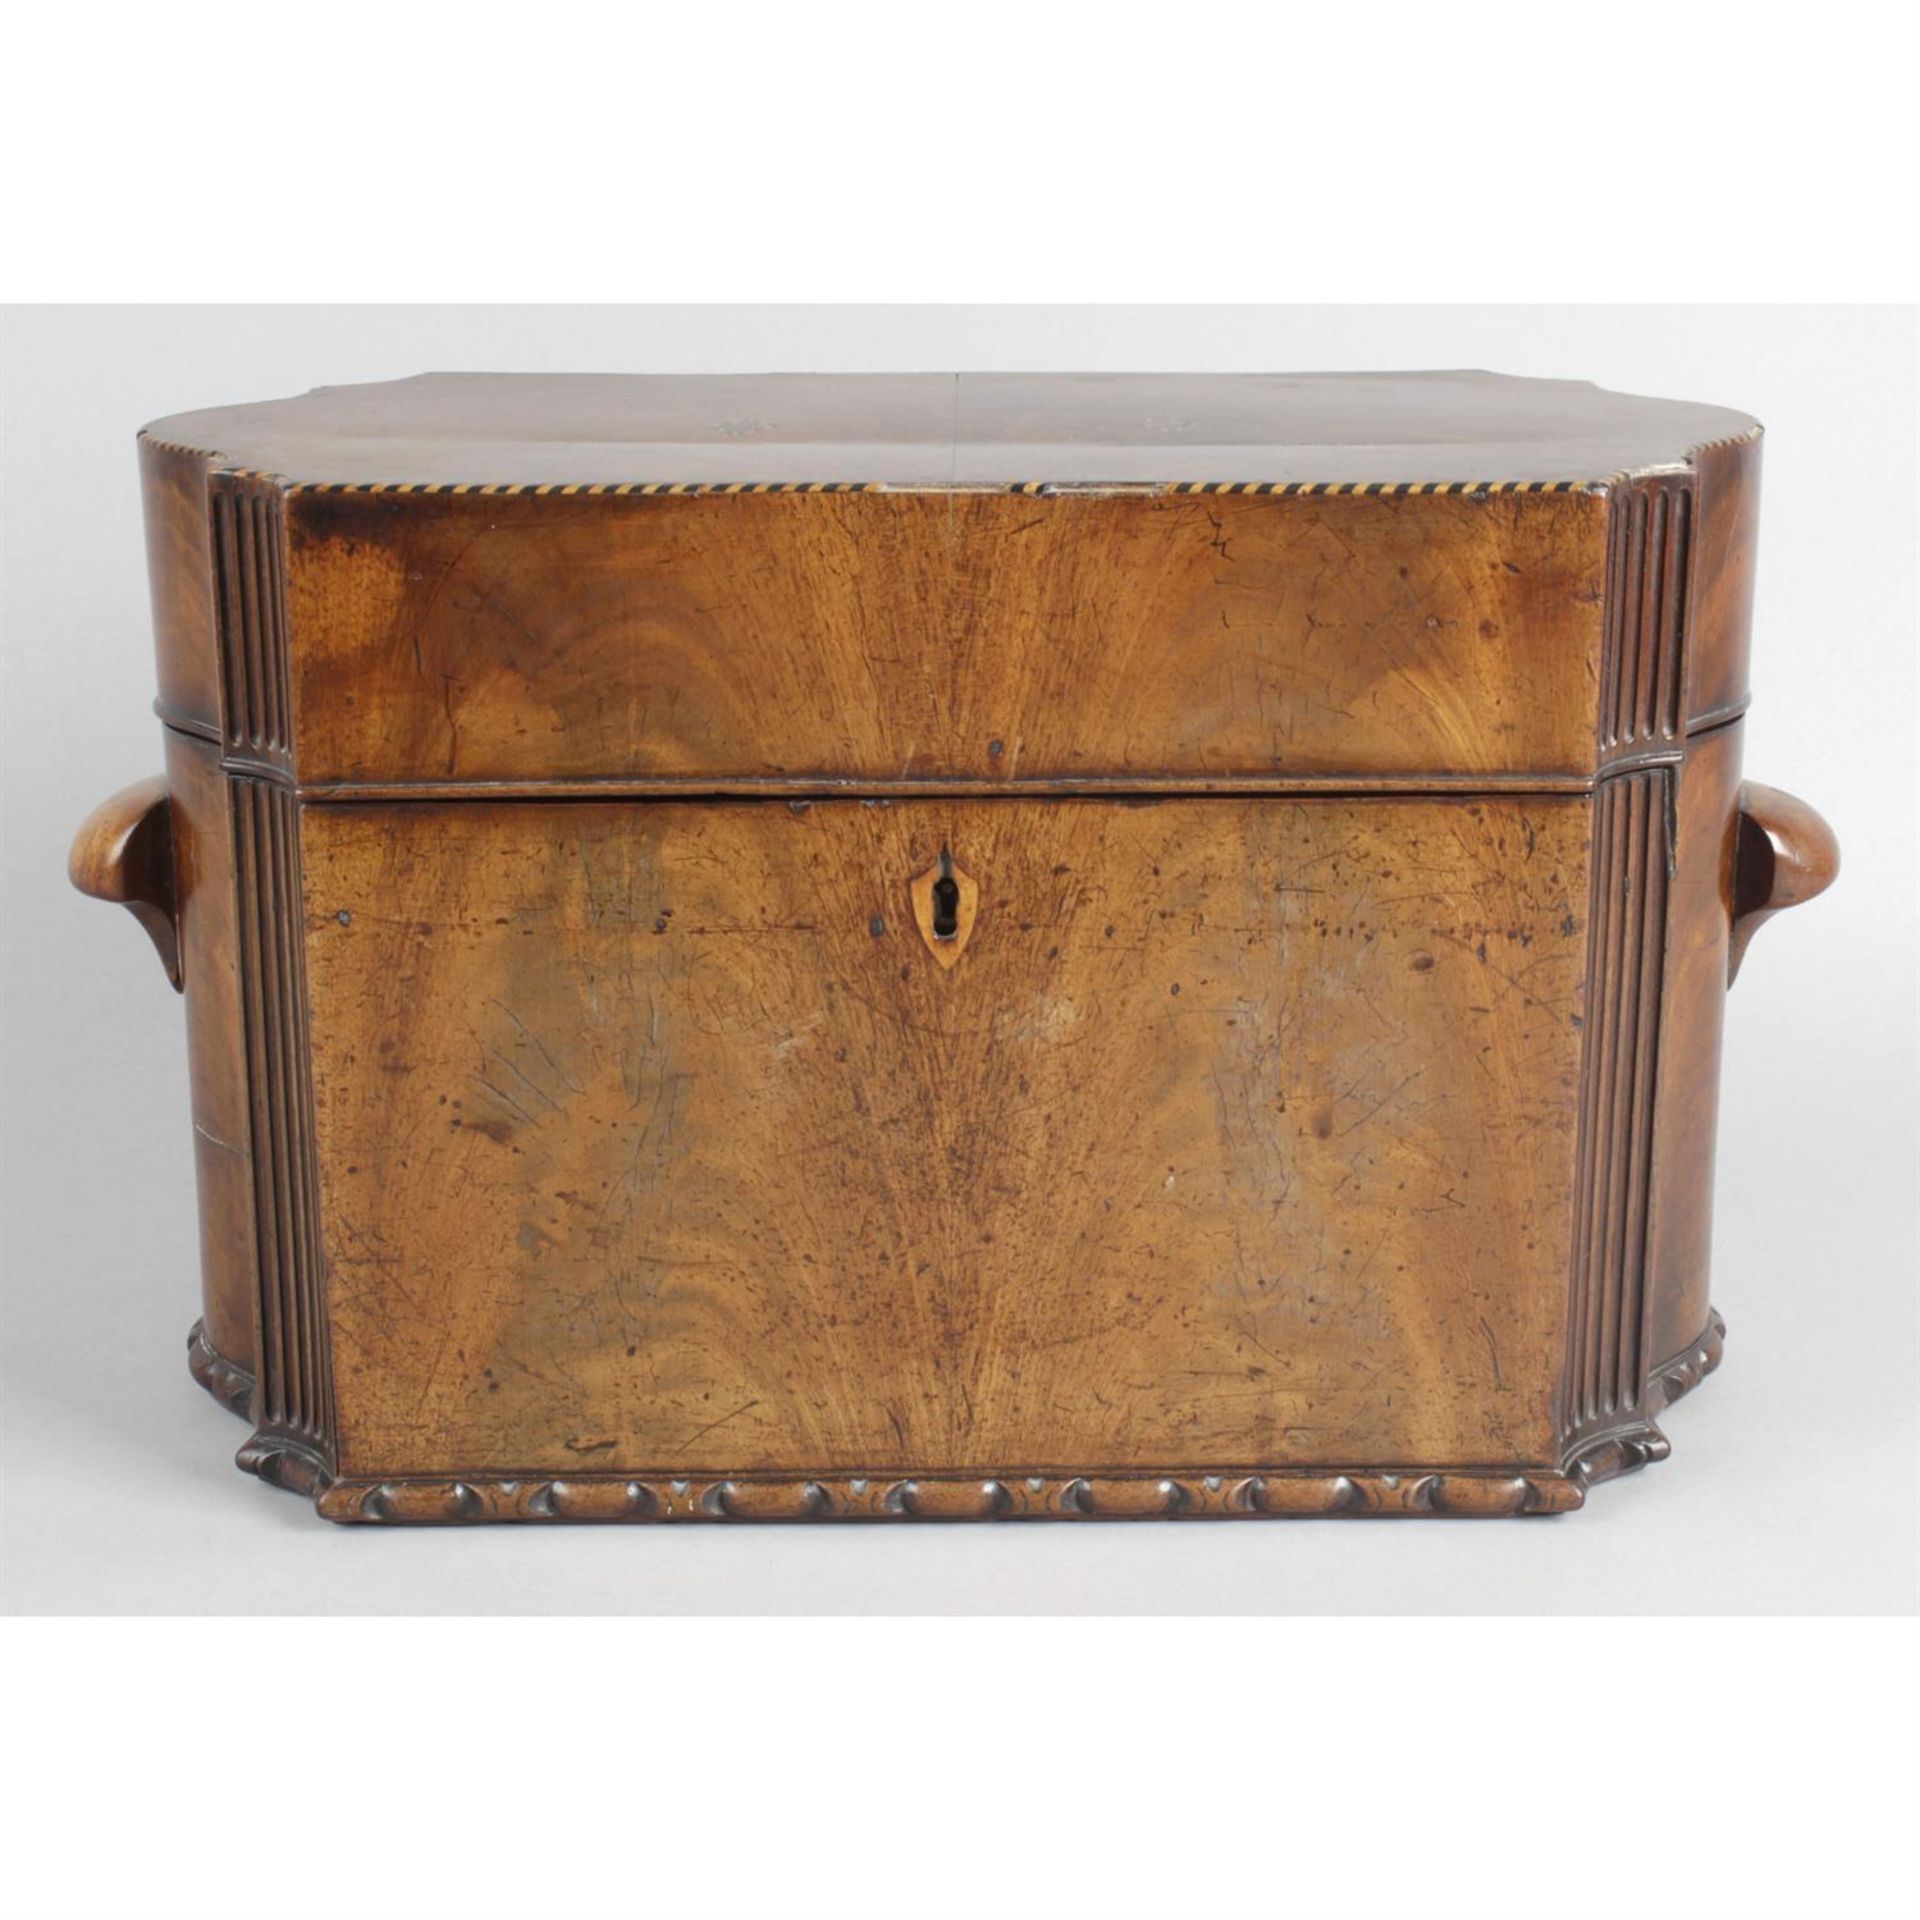 A 19th century mahogany veneered tea caddy, together with an Edwardian inlaid mahogany book trough.